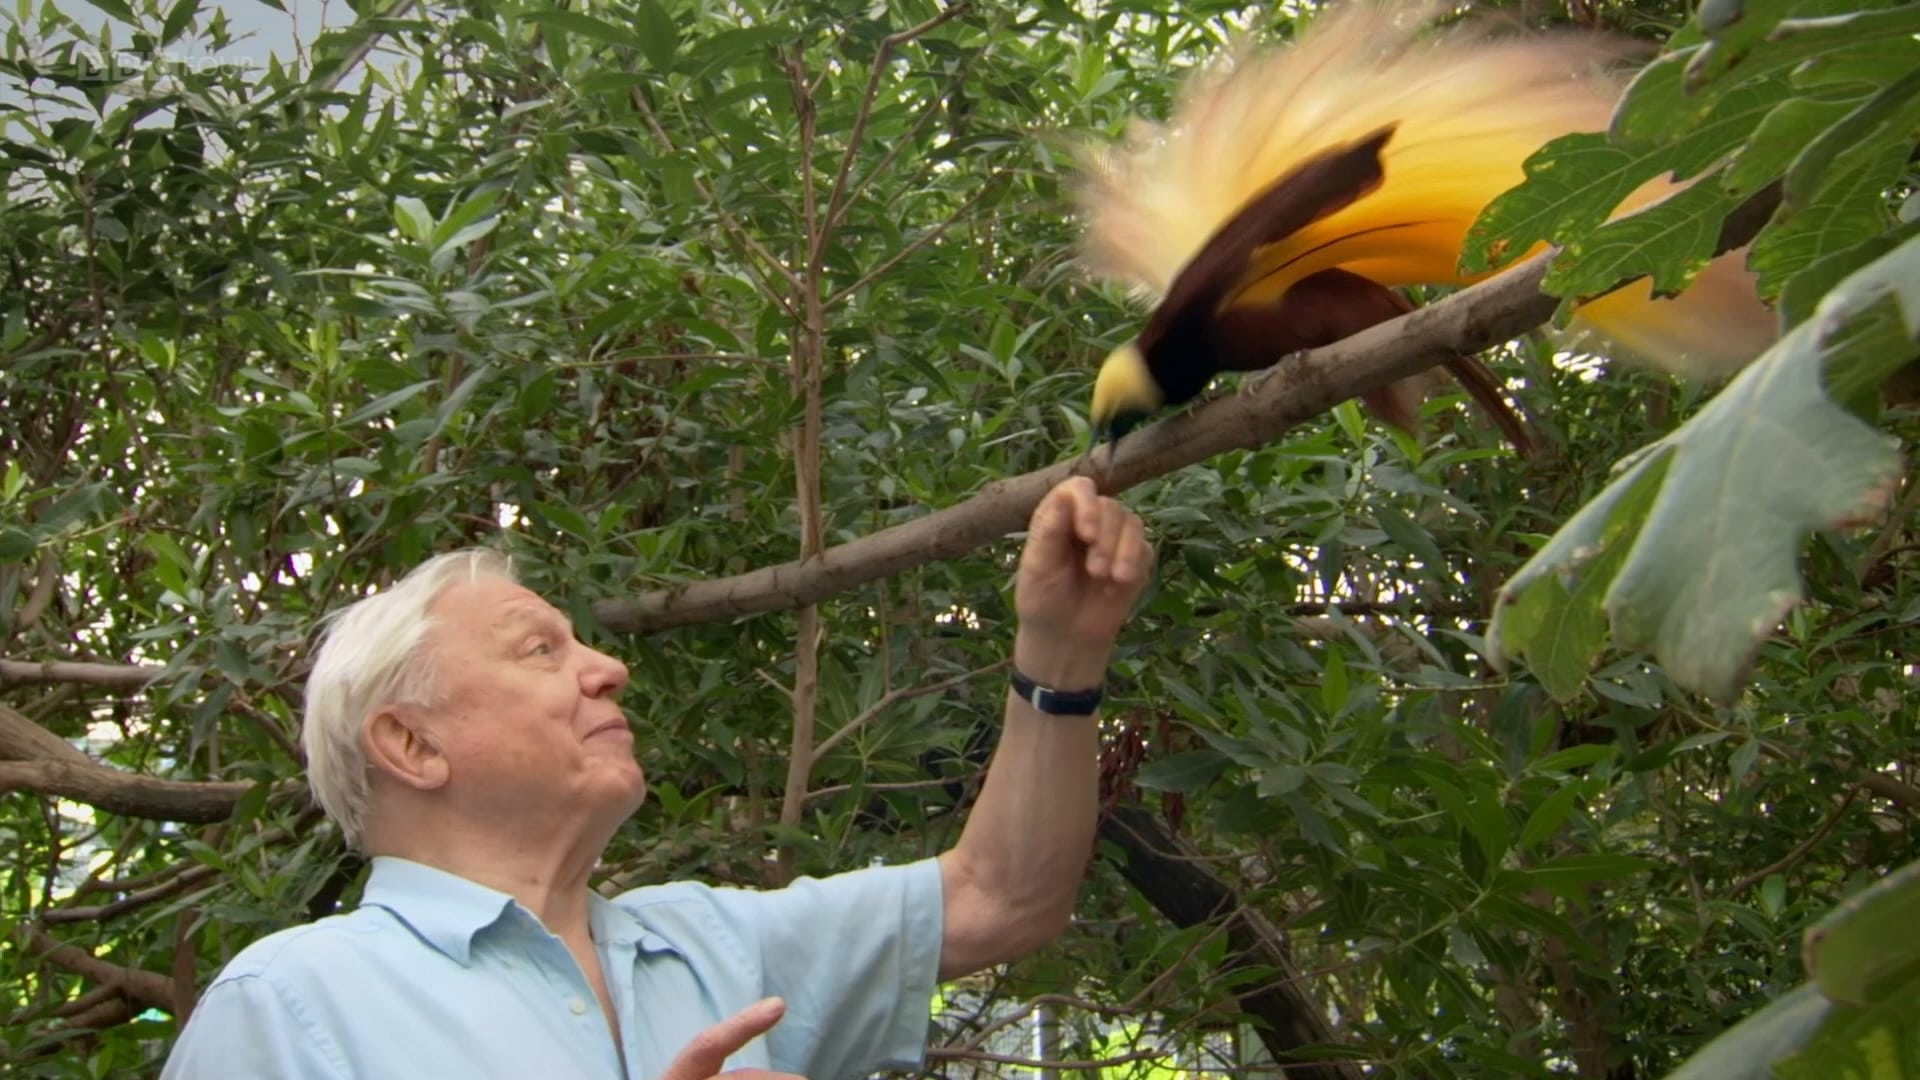 Attenborough's Paradise Birds (2015)